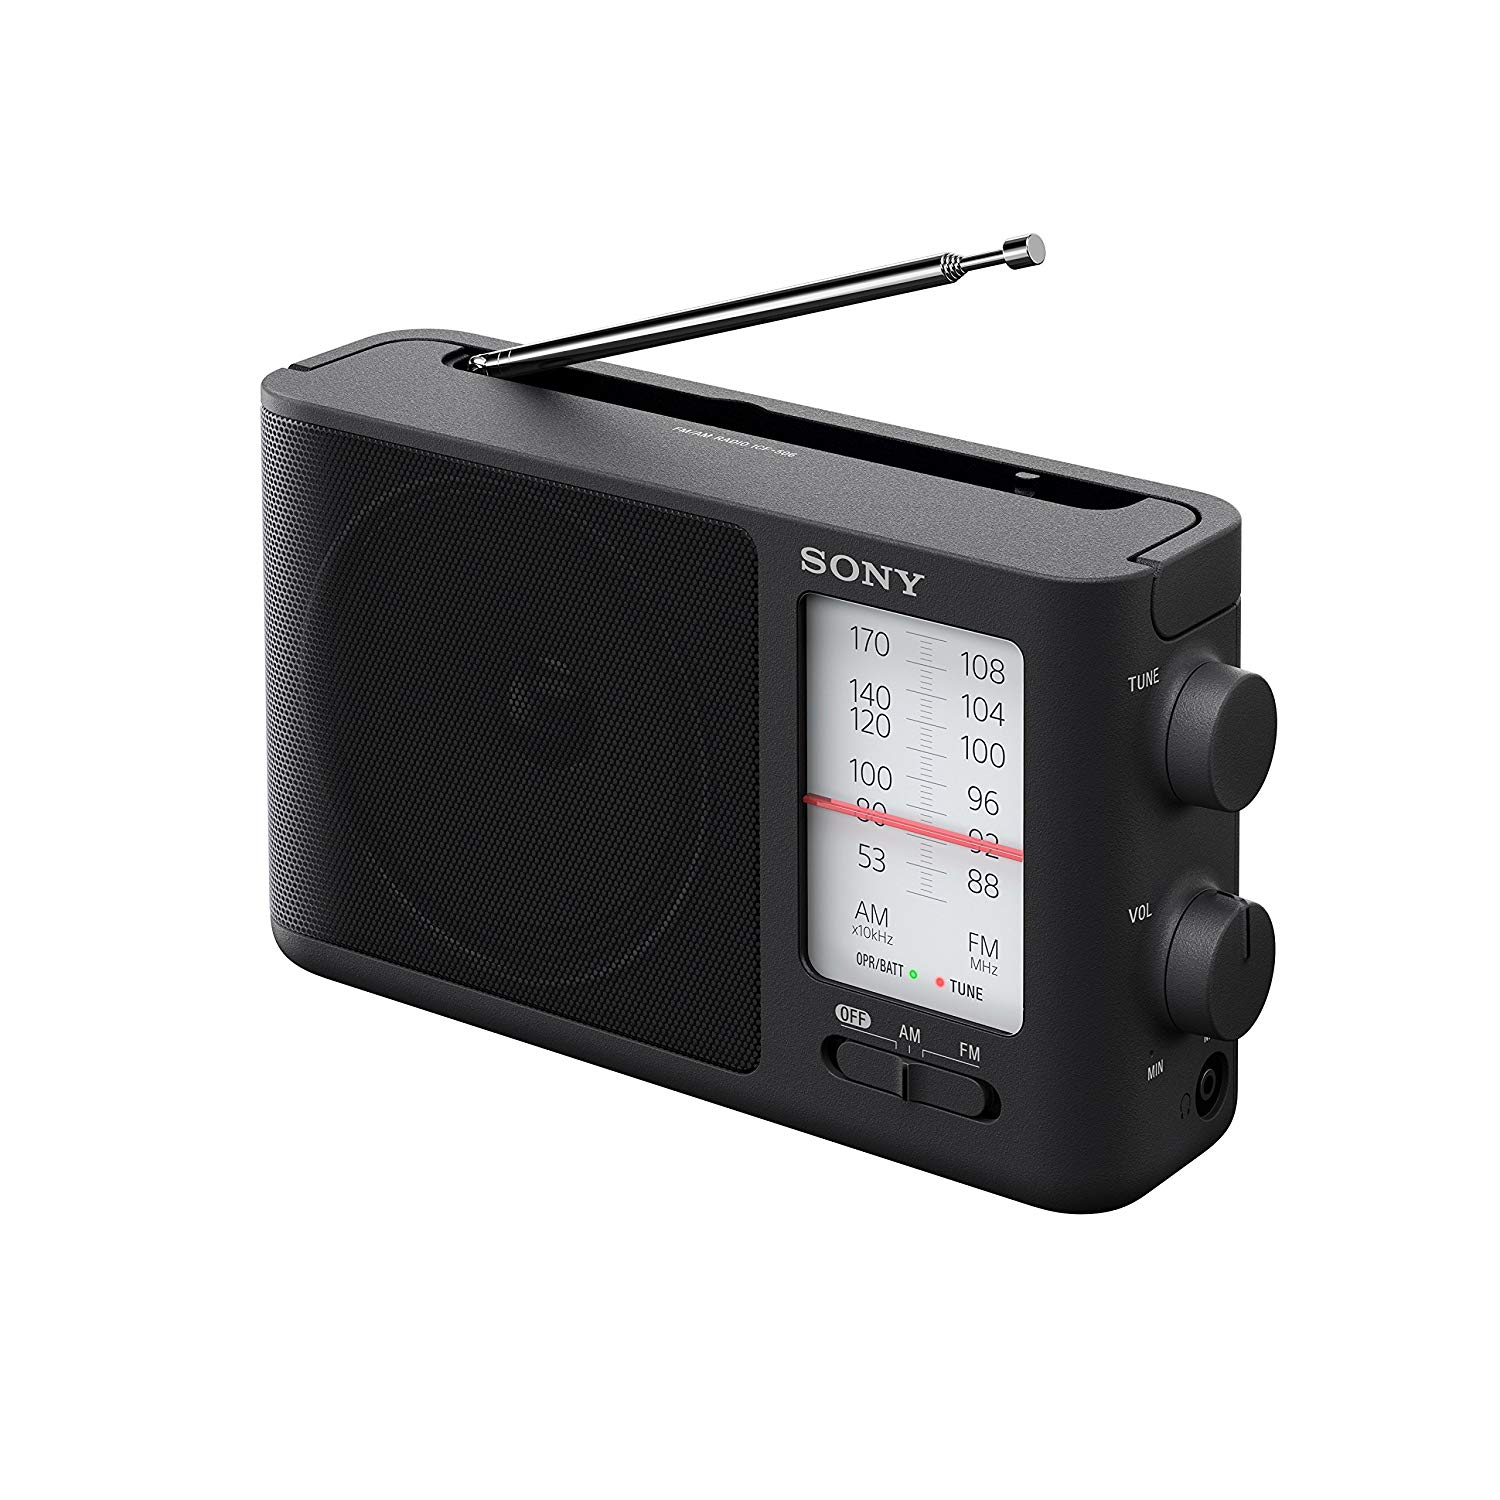 Sony ICF-506 ضبط تناظري راديو FM / AM محمول...